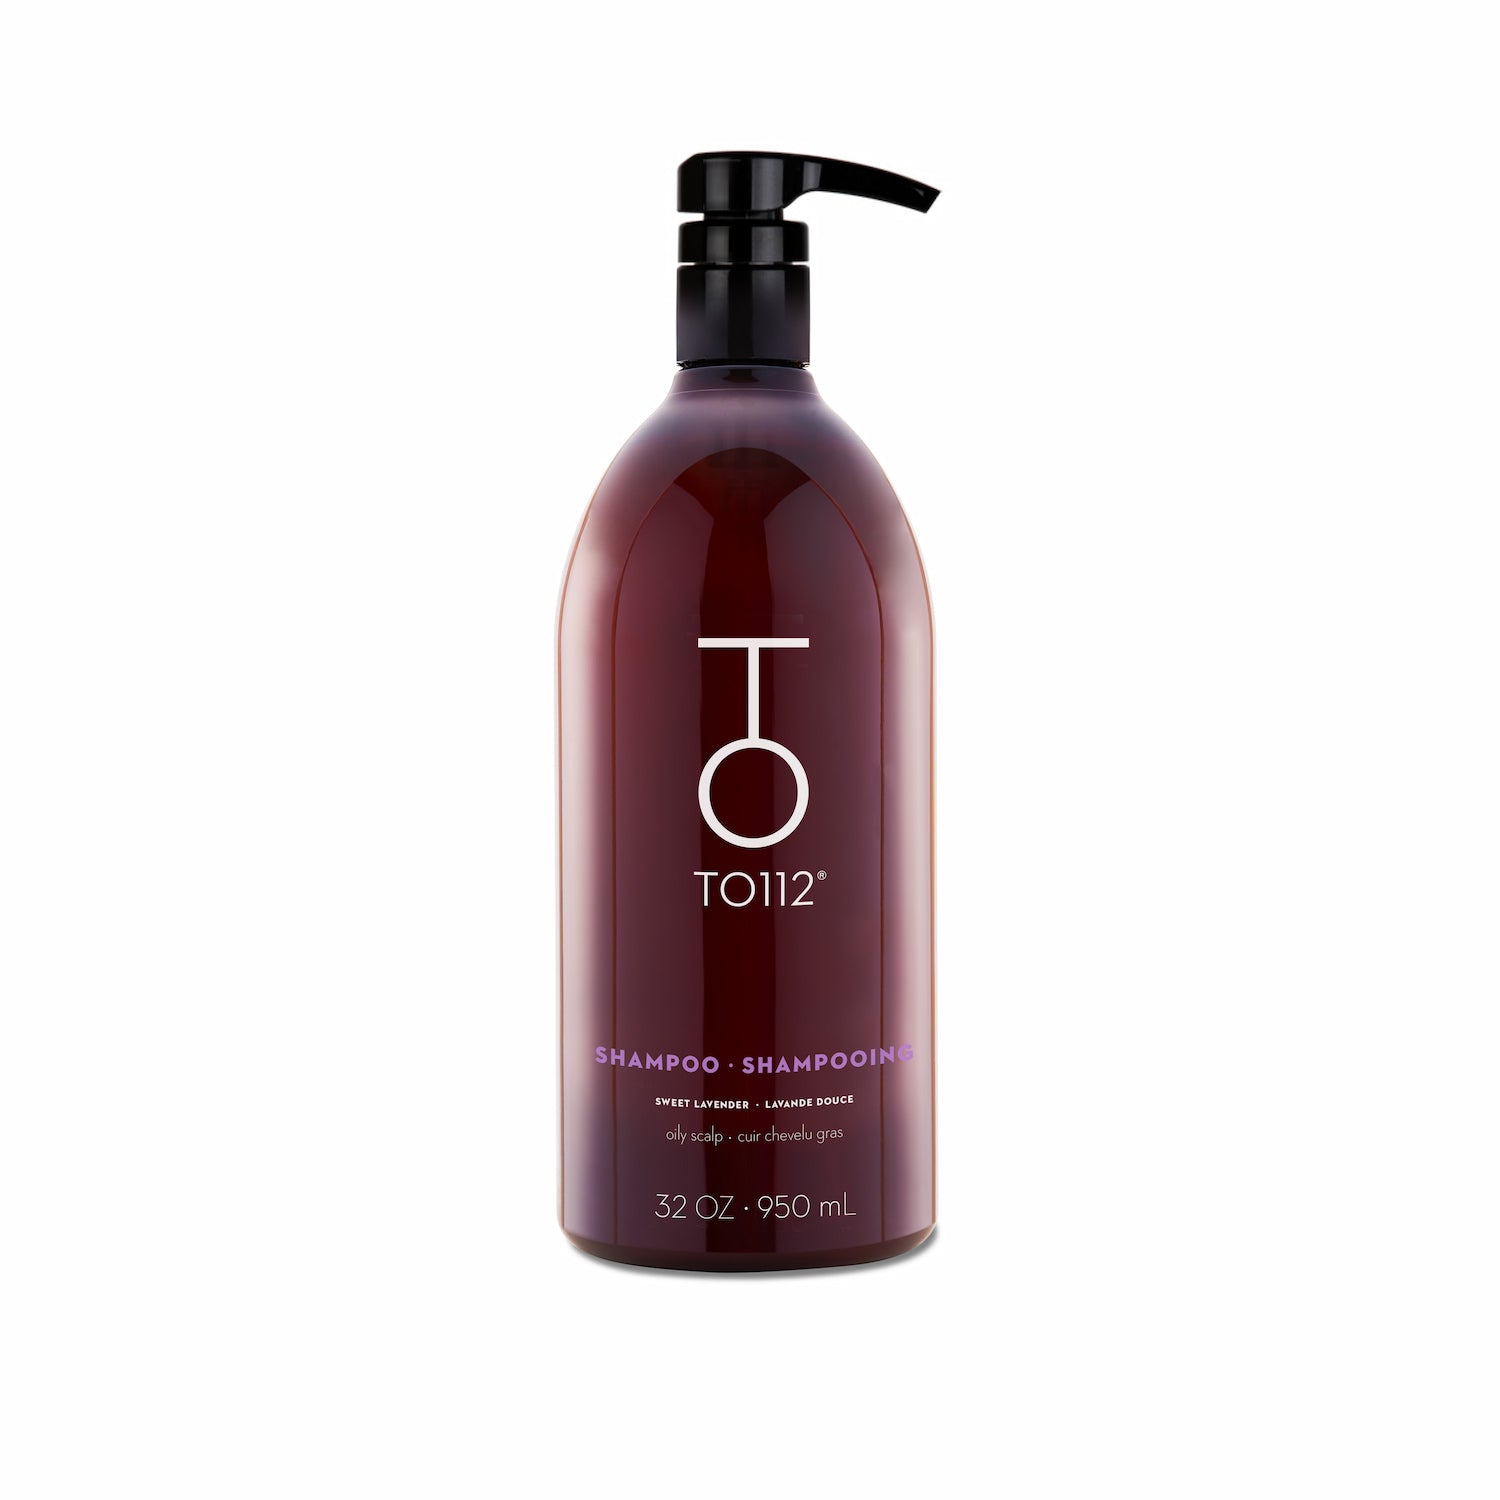 TO112 Shampoo For Fine Hair & Oily Scalps 32oz size